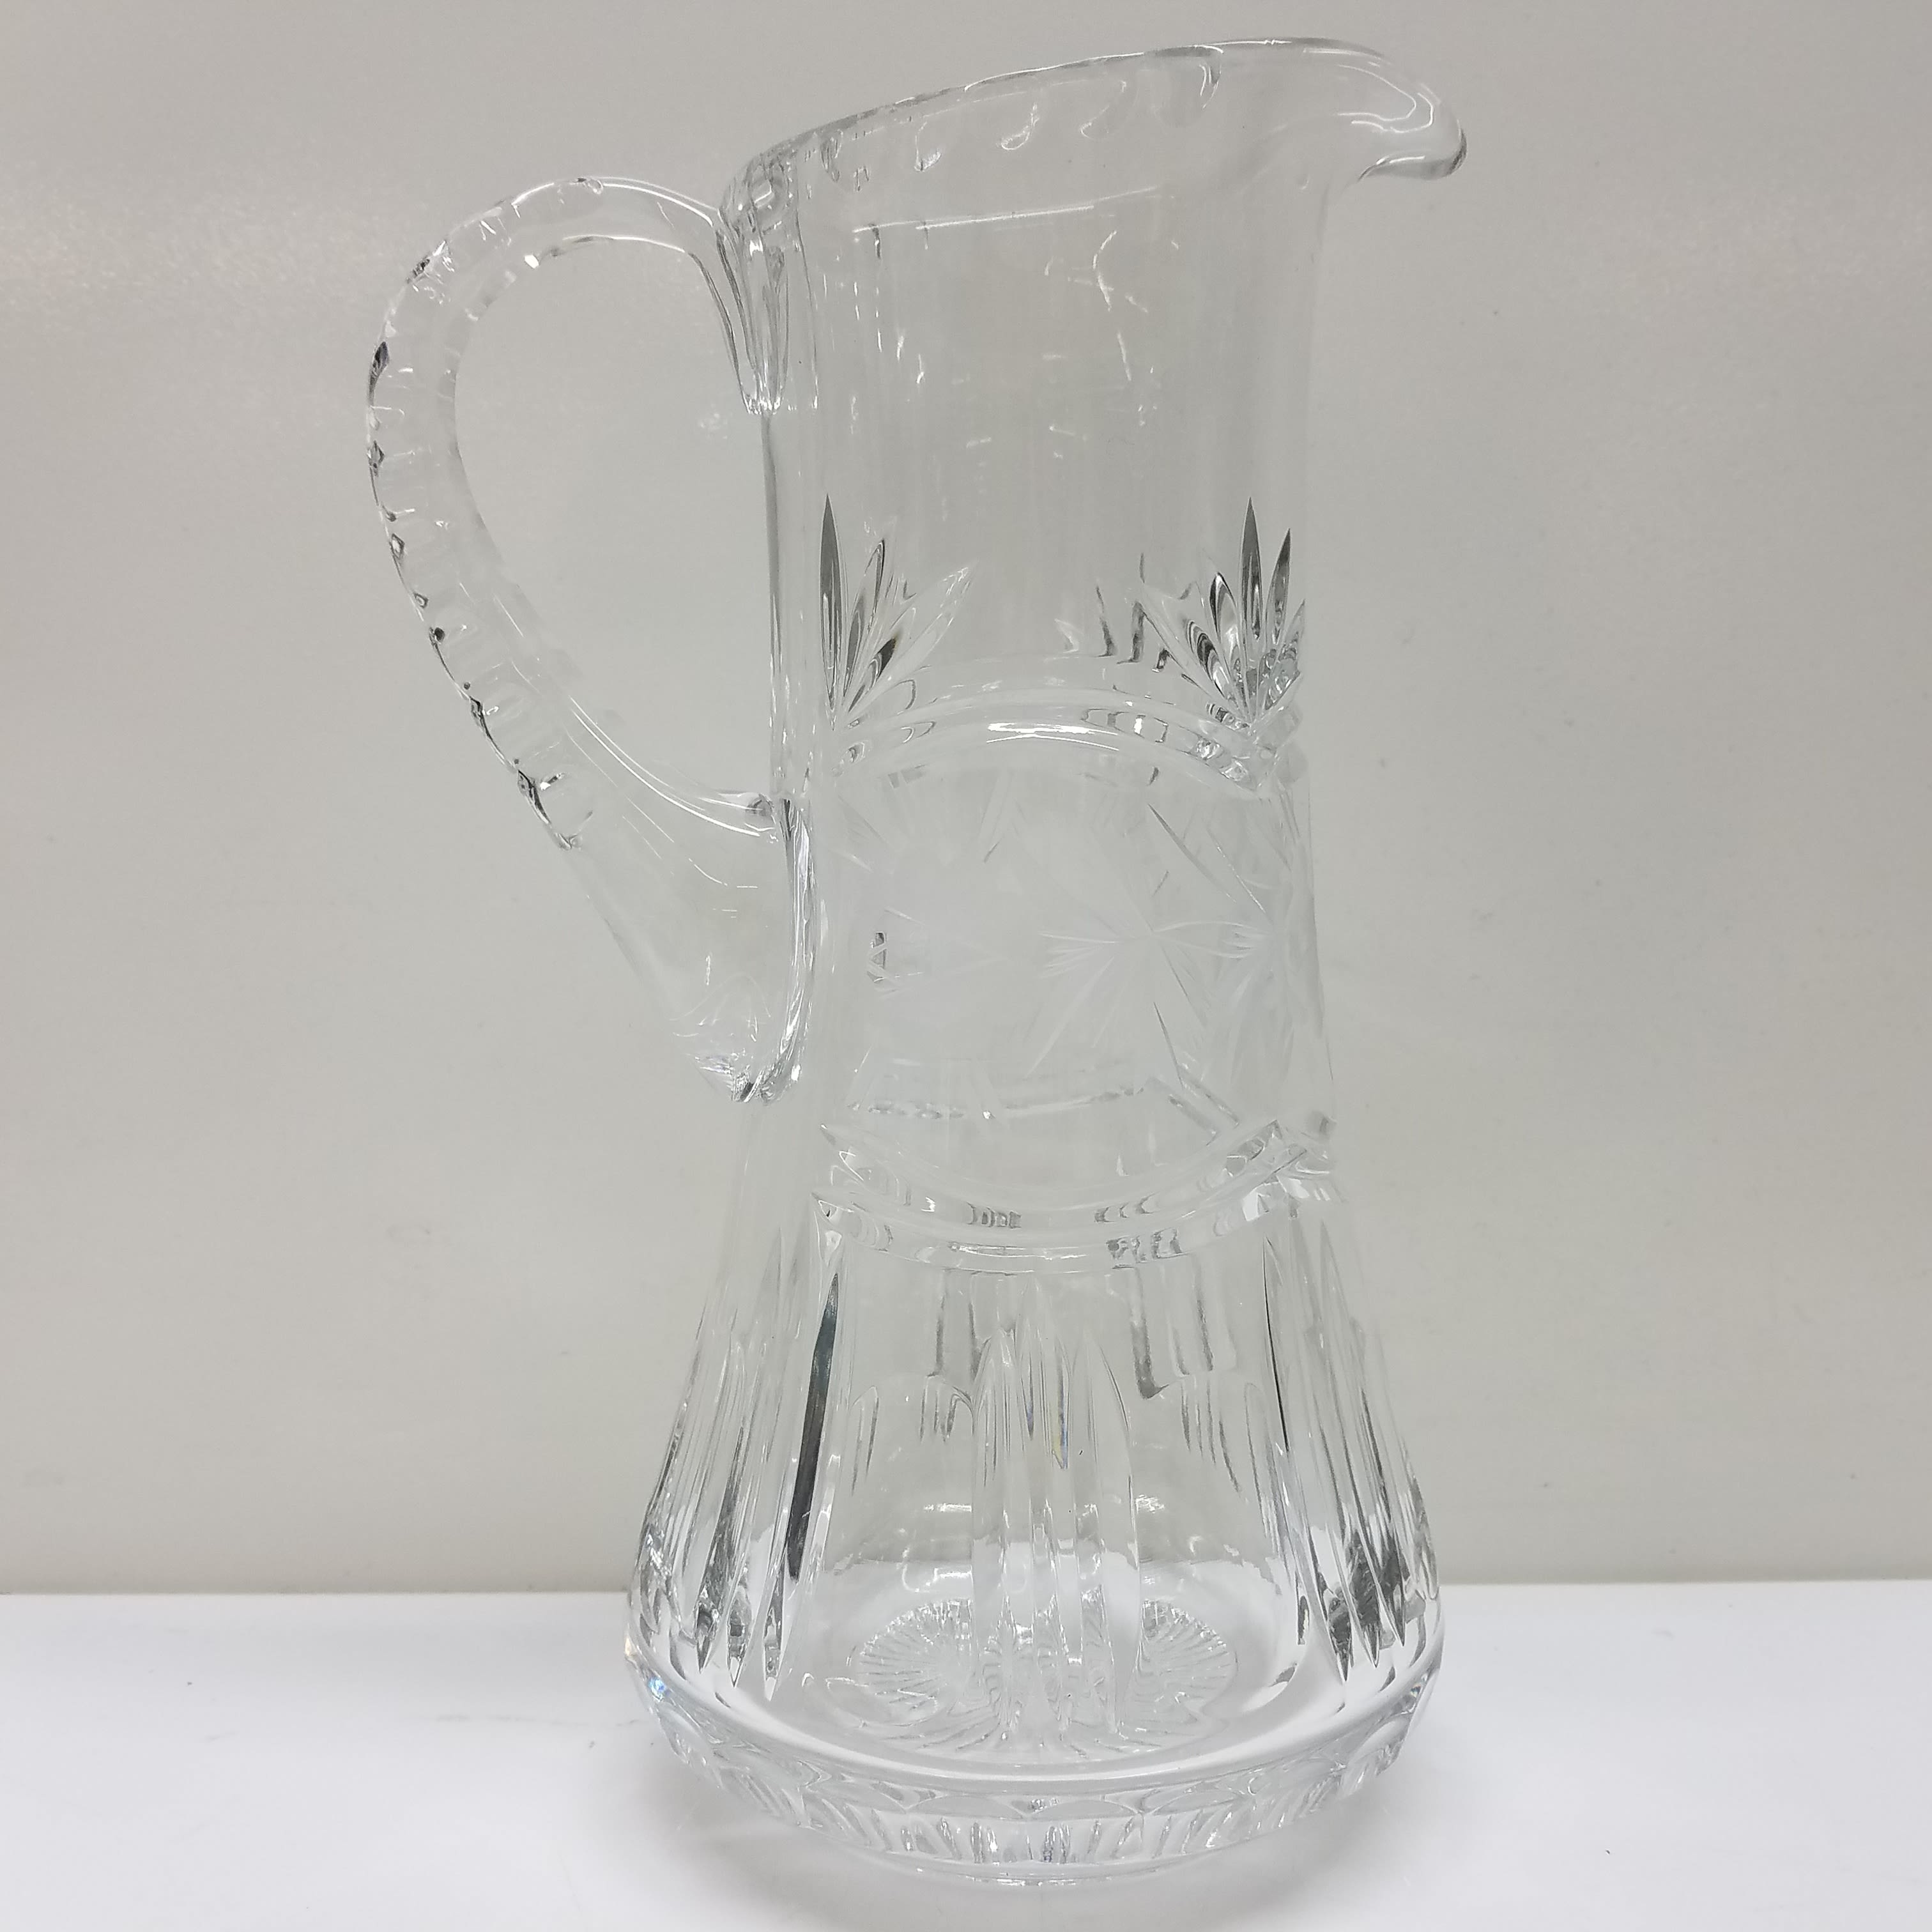 Small crystal pitcher. Vintage glass pitcher. 32 oz. Maximalist decor.  Grandmillenial flower vase. Shiny wedding gift. Cut glass party decor